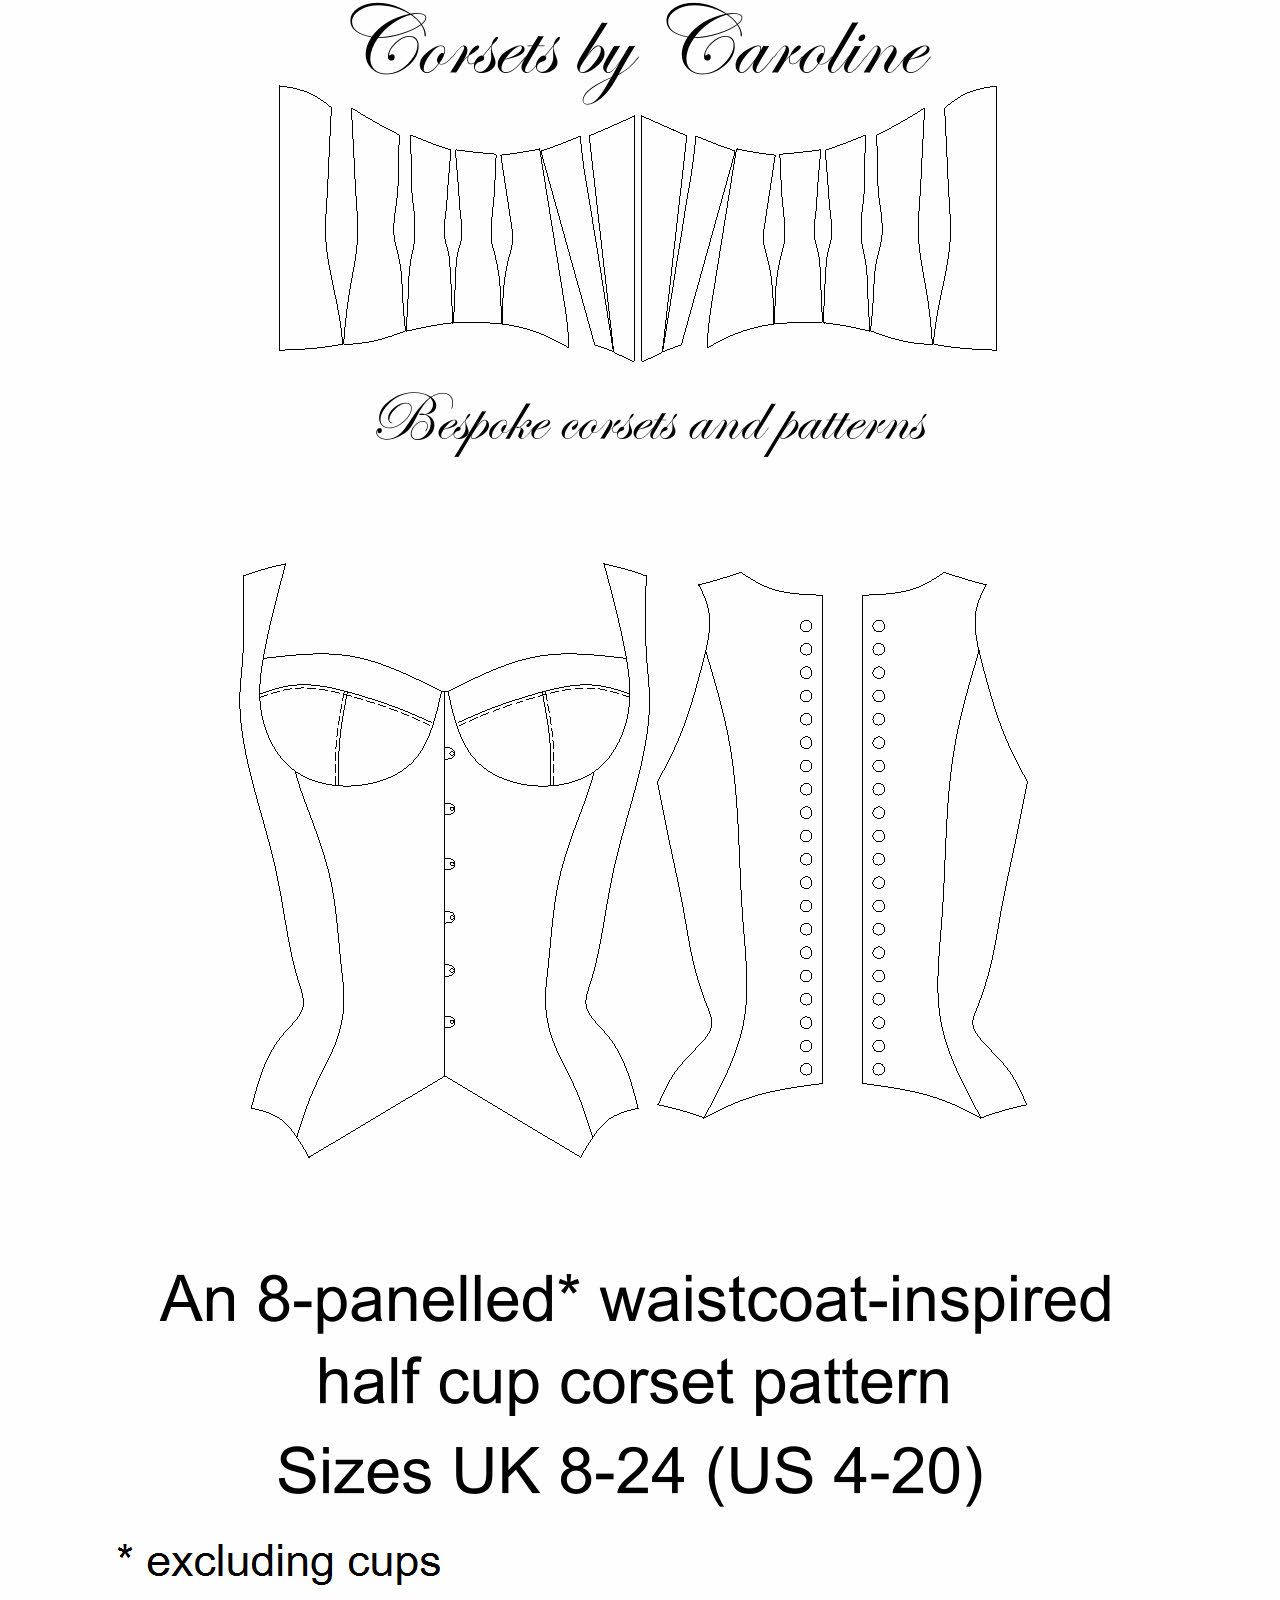 Cupped waistcoat pattern sizes UK8-24 US 4-20